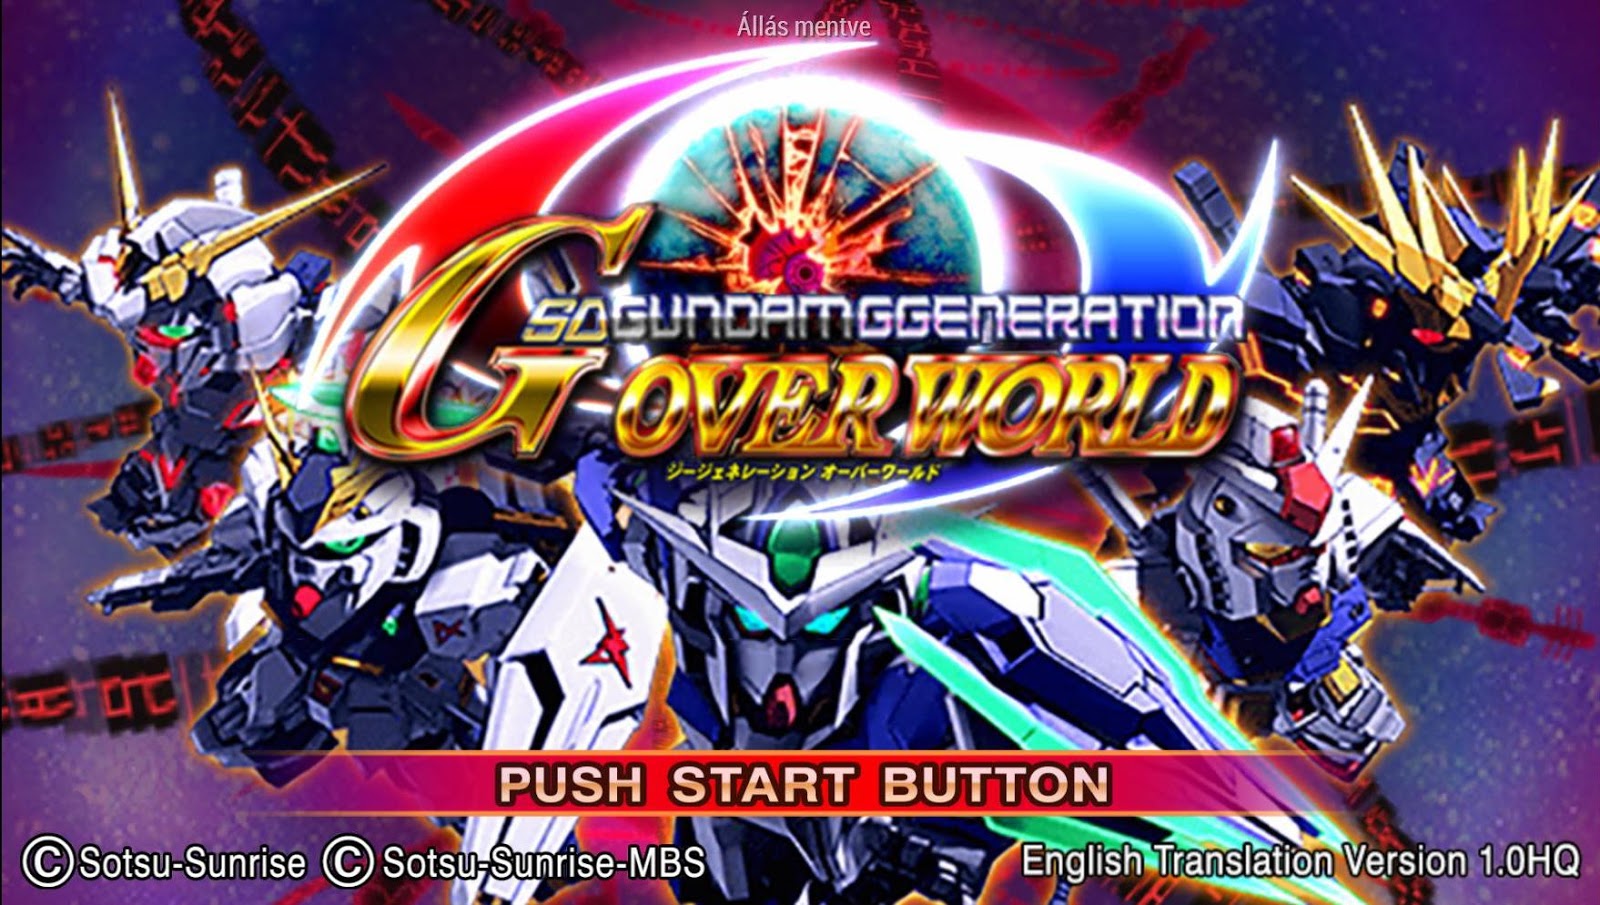 [PSP Rom] SD Gundam G Generation Overworld (English ...